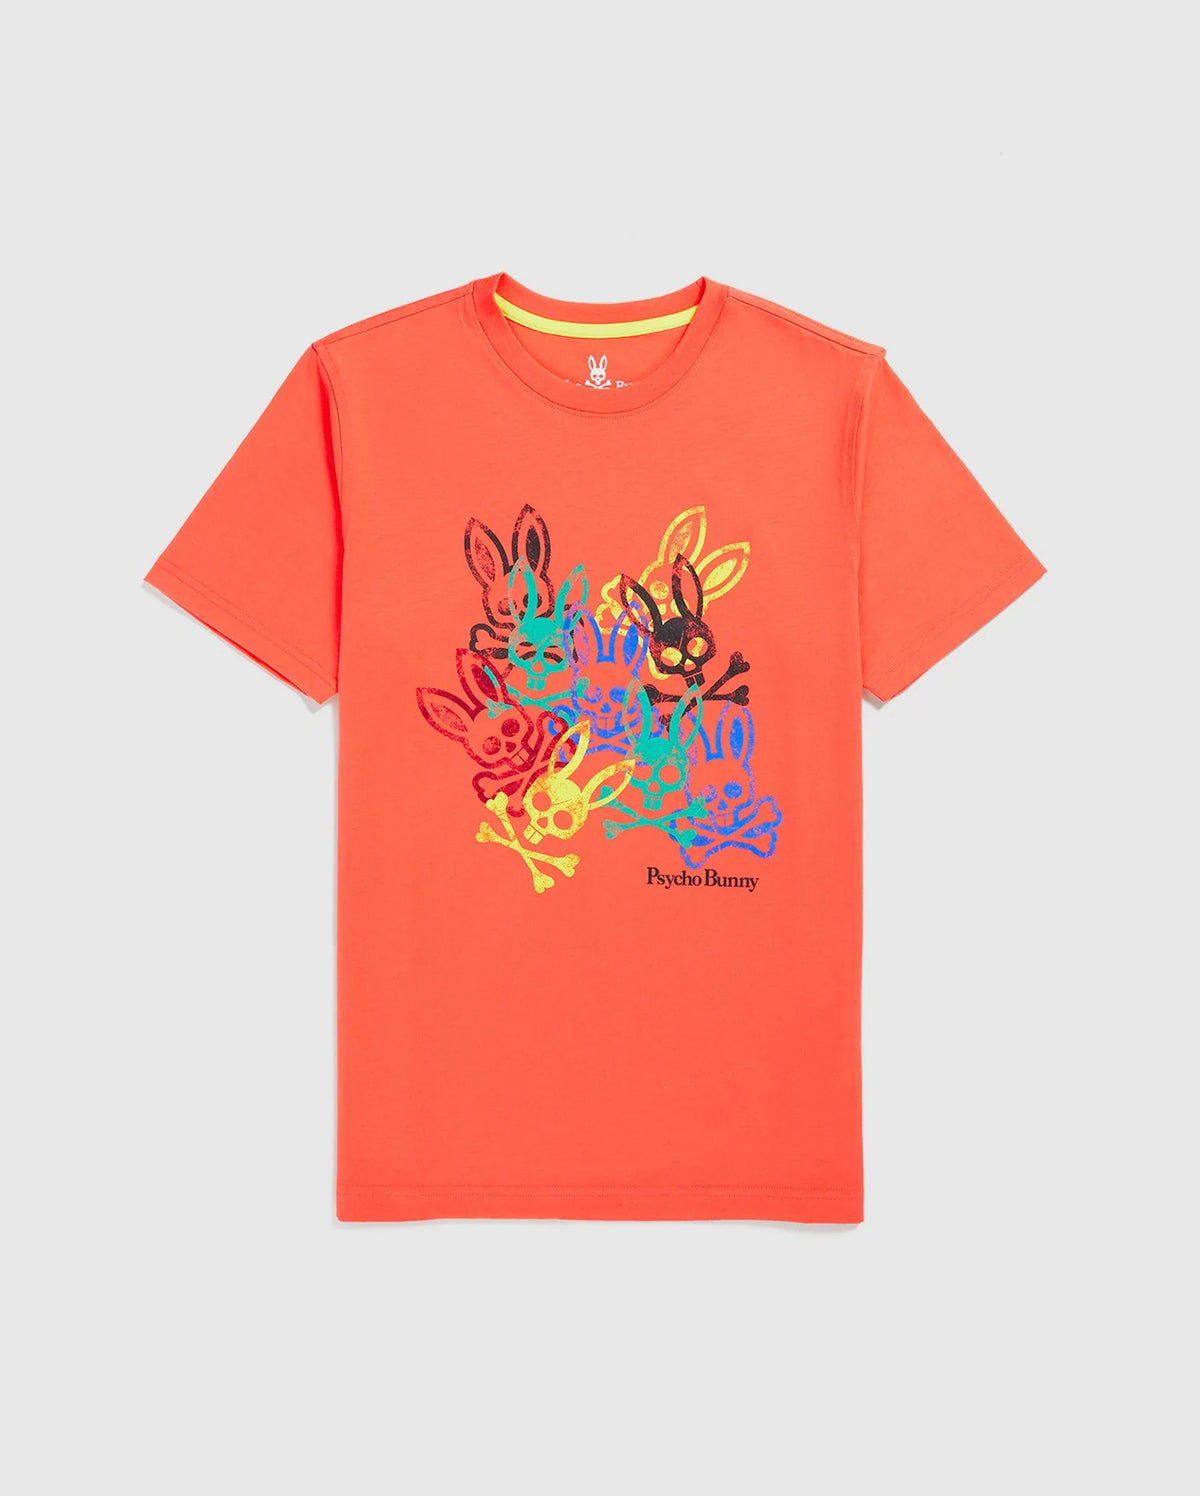 Psycho Bunny (B6U893U1PC) - Mens Chrystie T-shirt - 823 Orange Burst